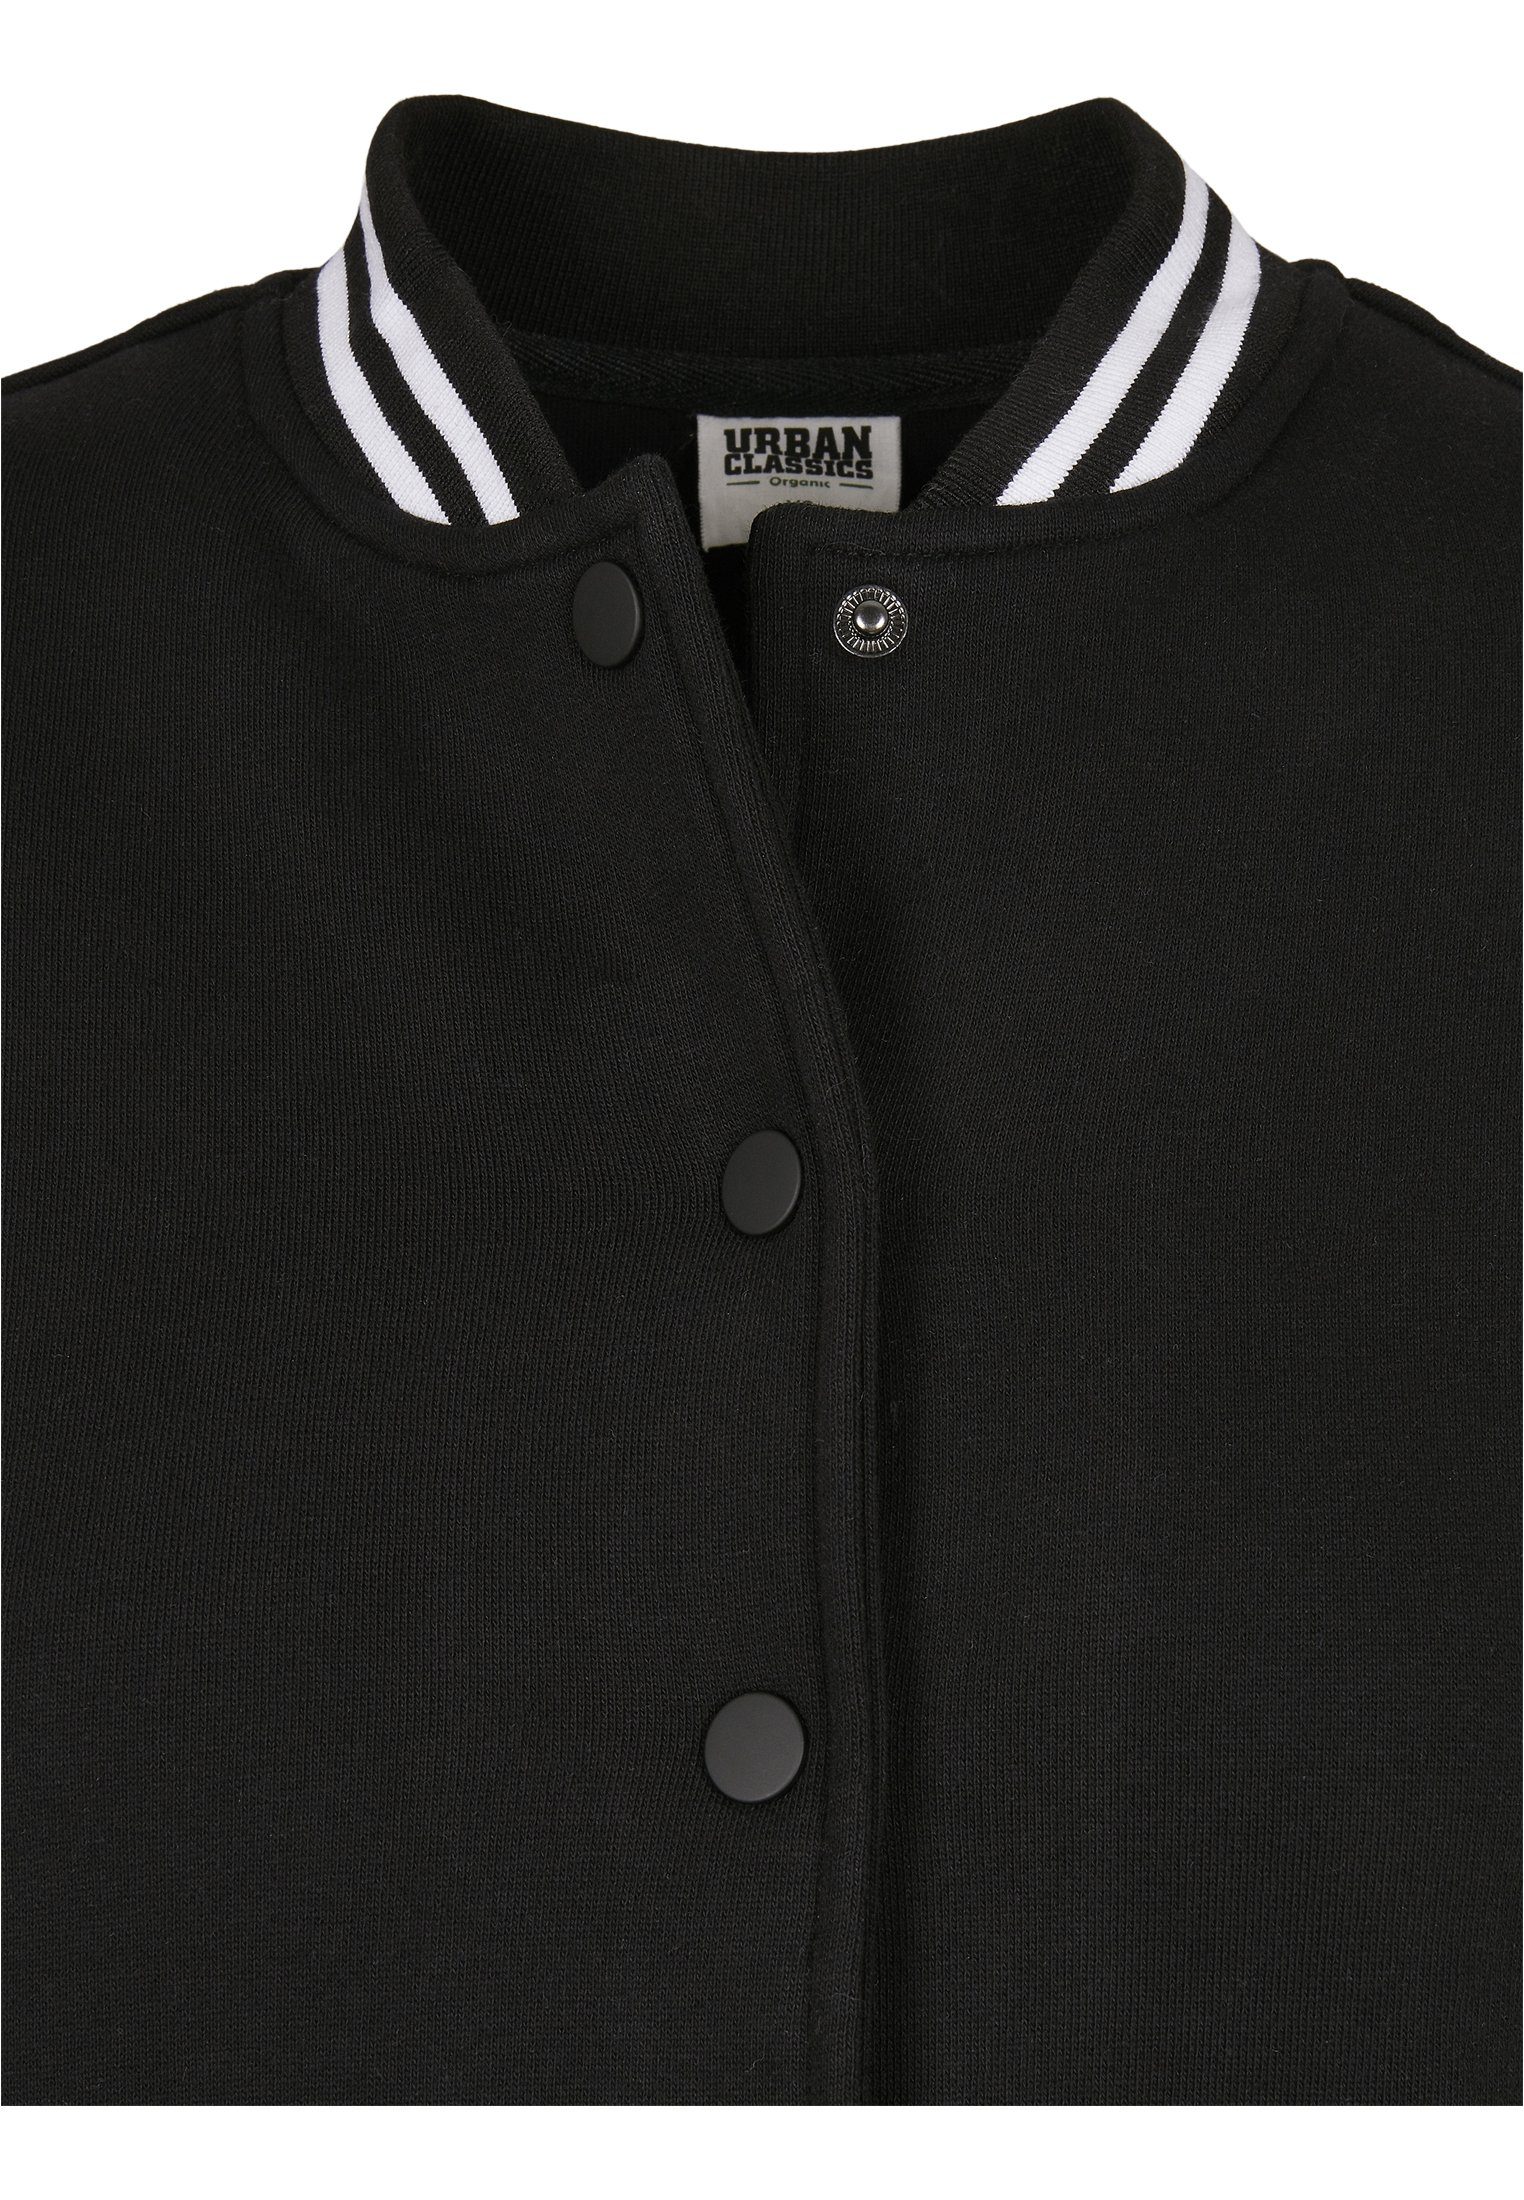 URBAN CLASSICS Damen Collegejacke (1-St) Organic black/white Inset College Jacket Sweat Ladies